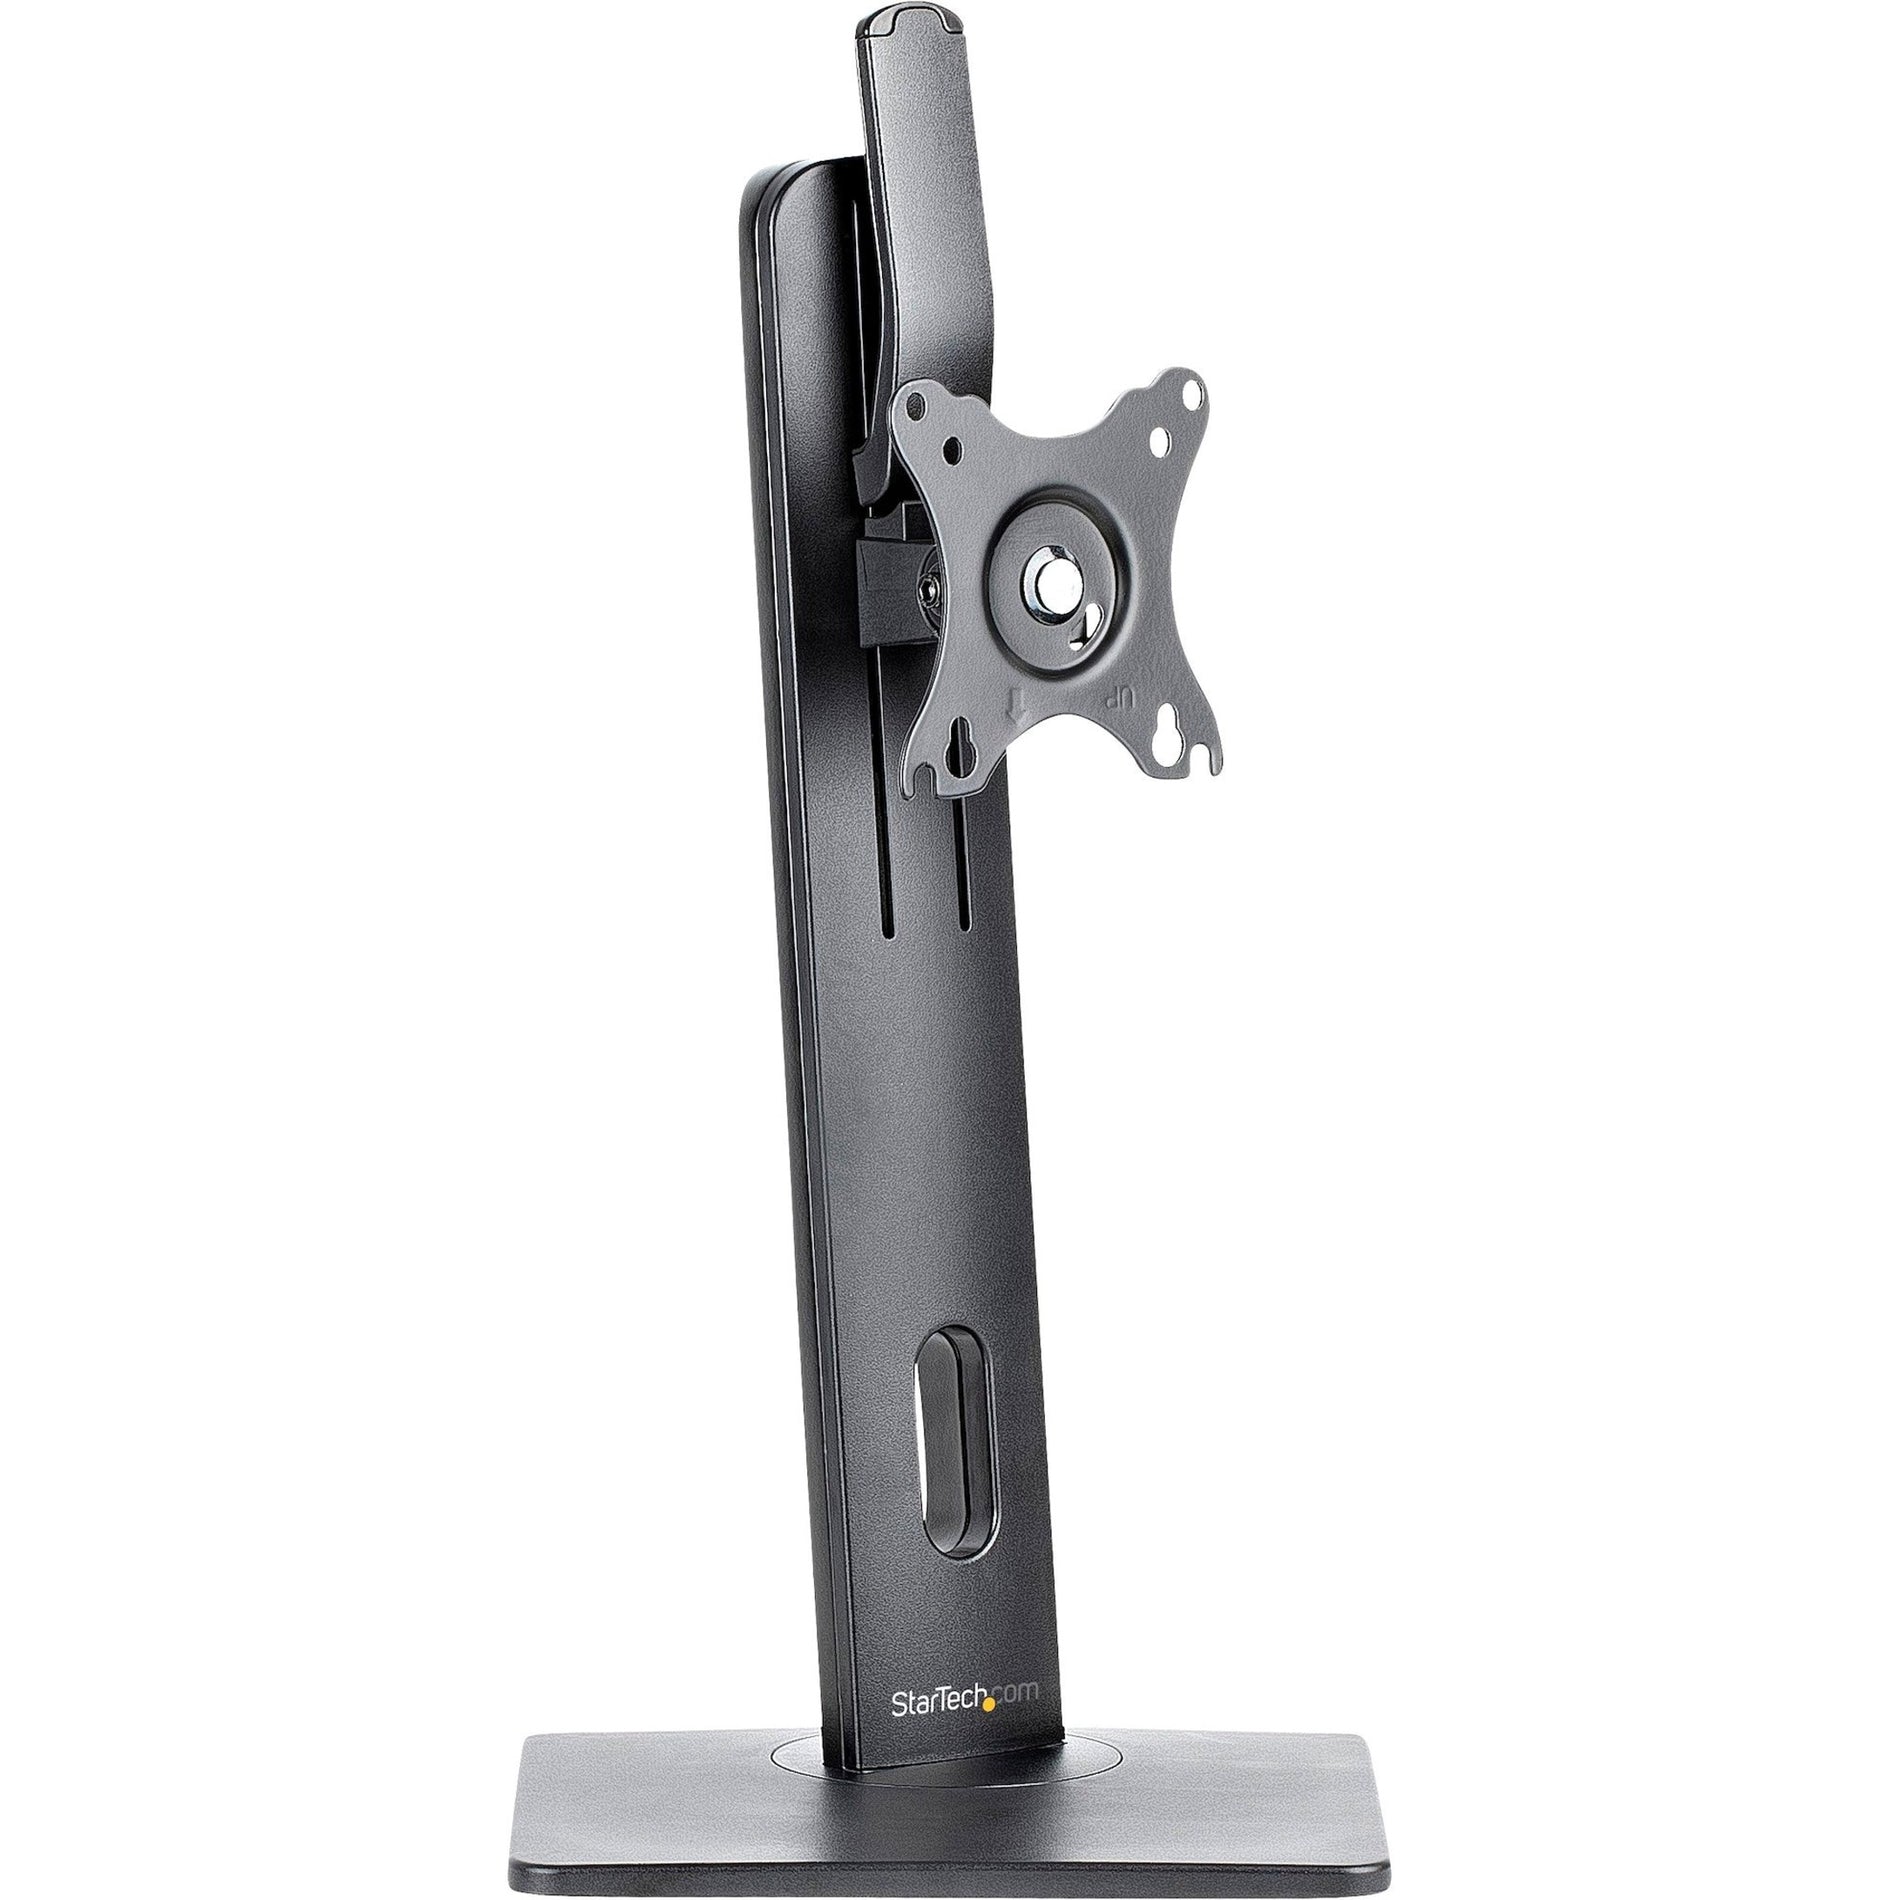 StarTech.com FPPNEUSTND Monitor Stand, Height Adjustable Ergonomic Desk Stand, for VESA Mount Displays up to 32" (15lb)